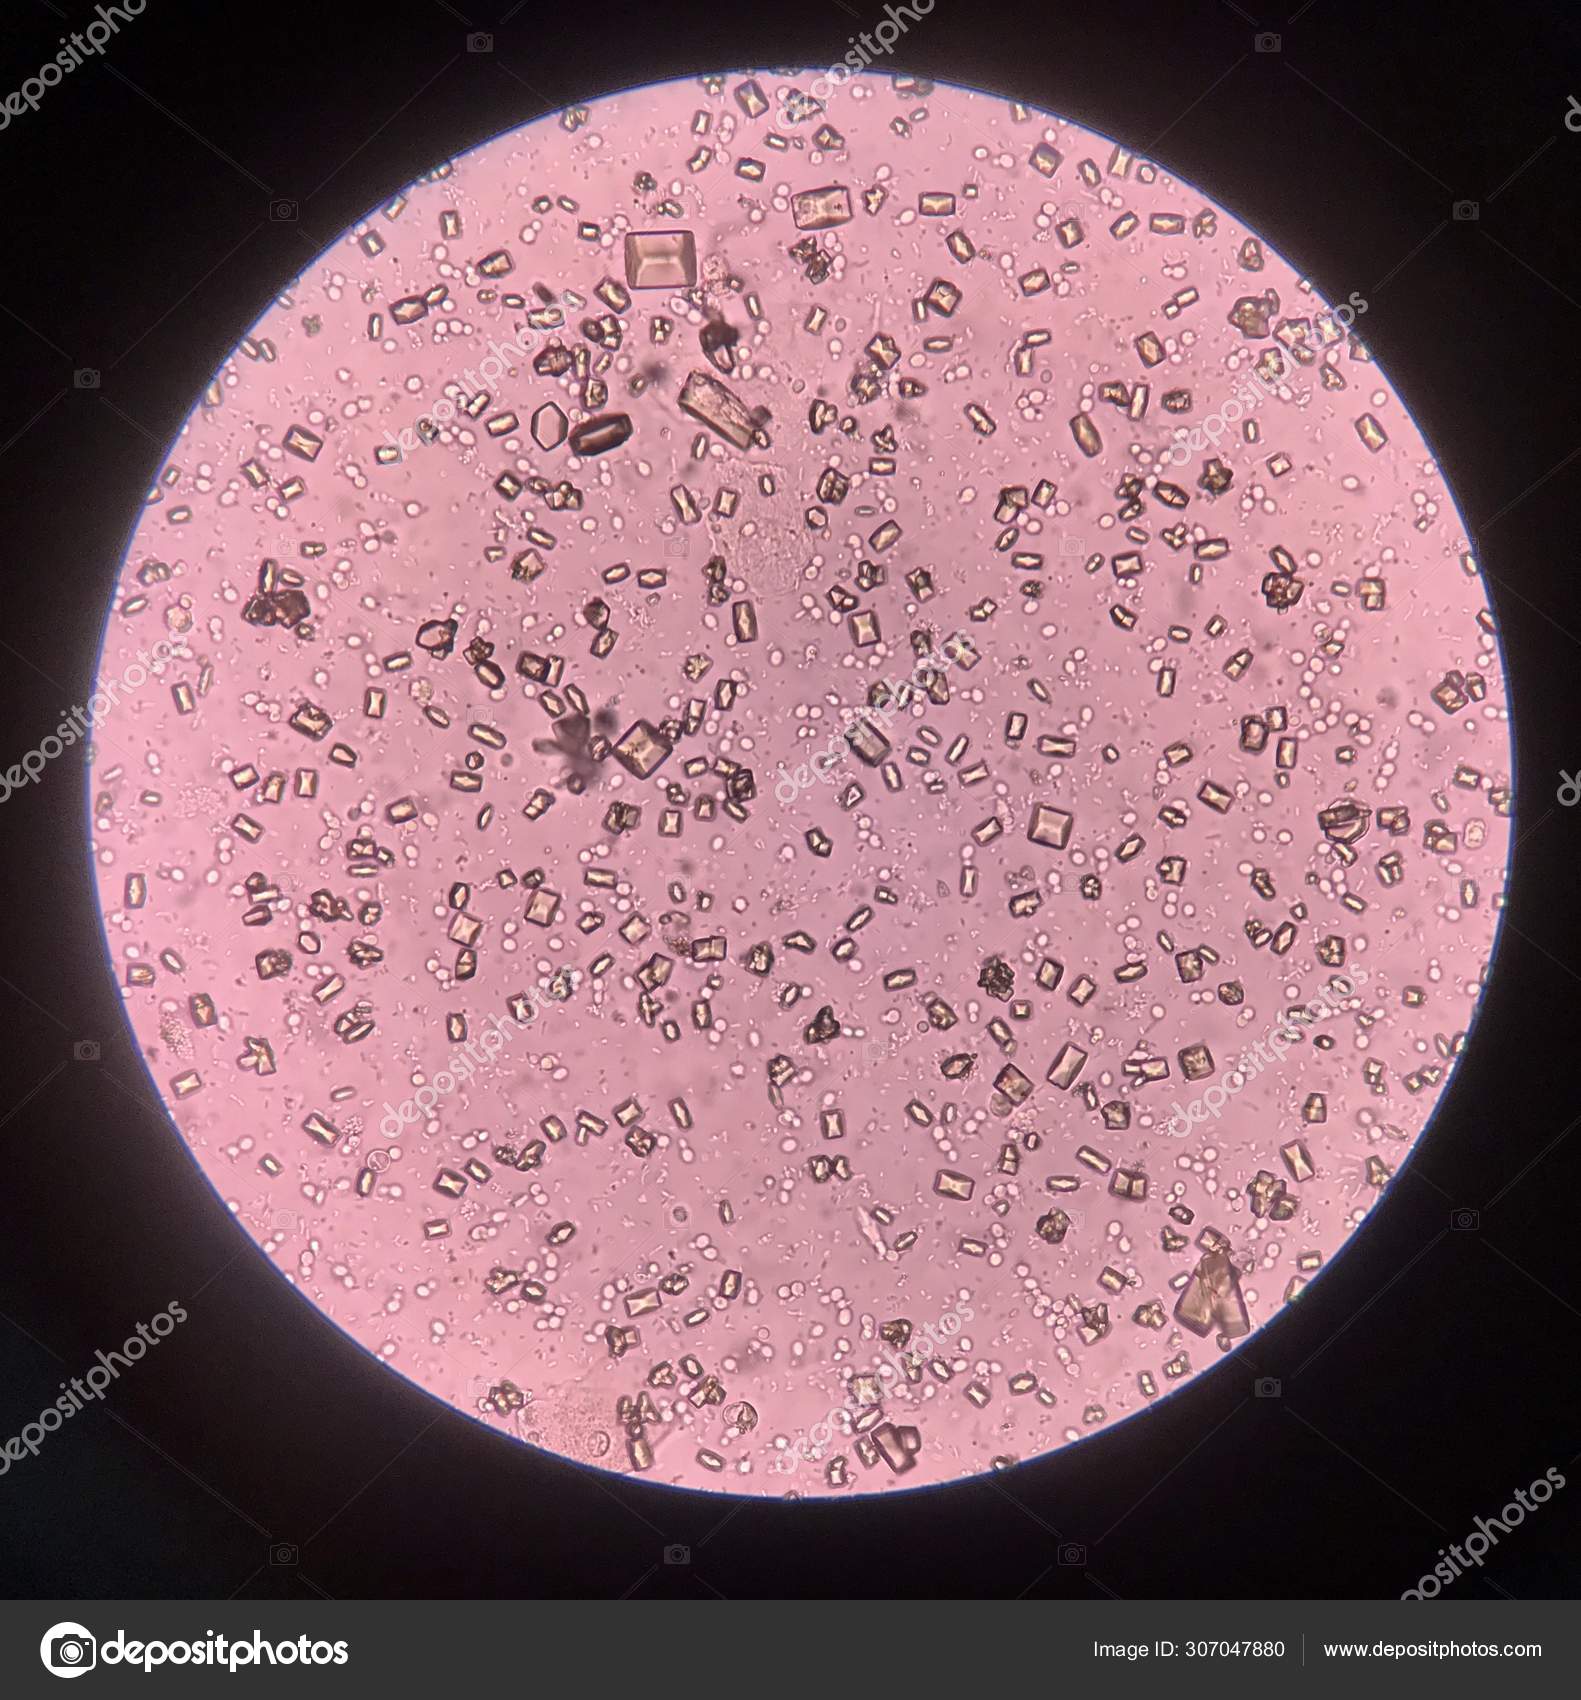 Бактерии и белки в моче. Бактерии в моче микроскопия. Бактерии в моче под микроскопом. Осадок мочи под микроскопом. Осадок в моче под микроскопом.